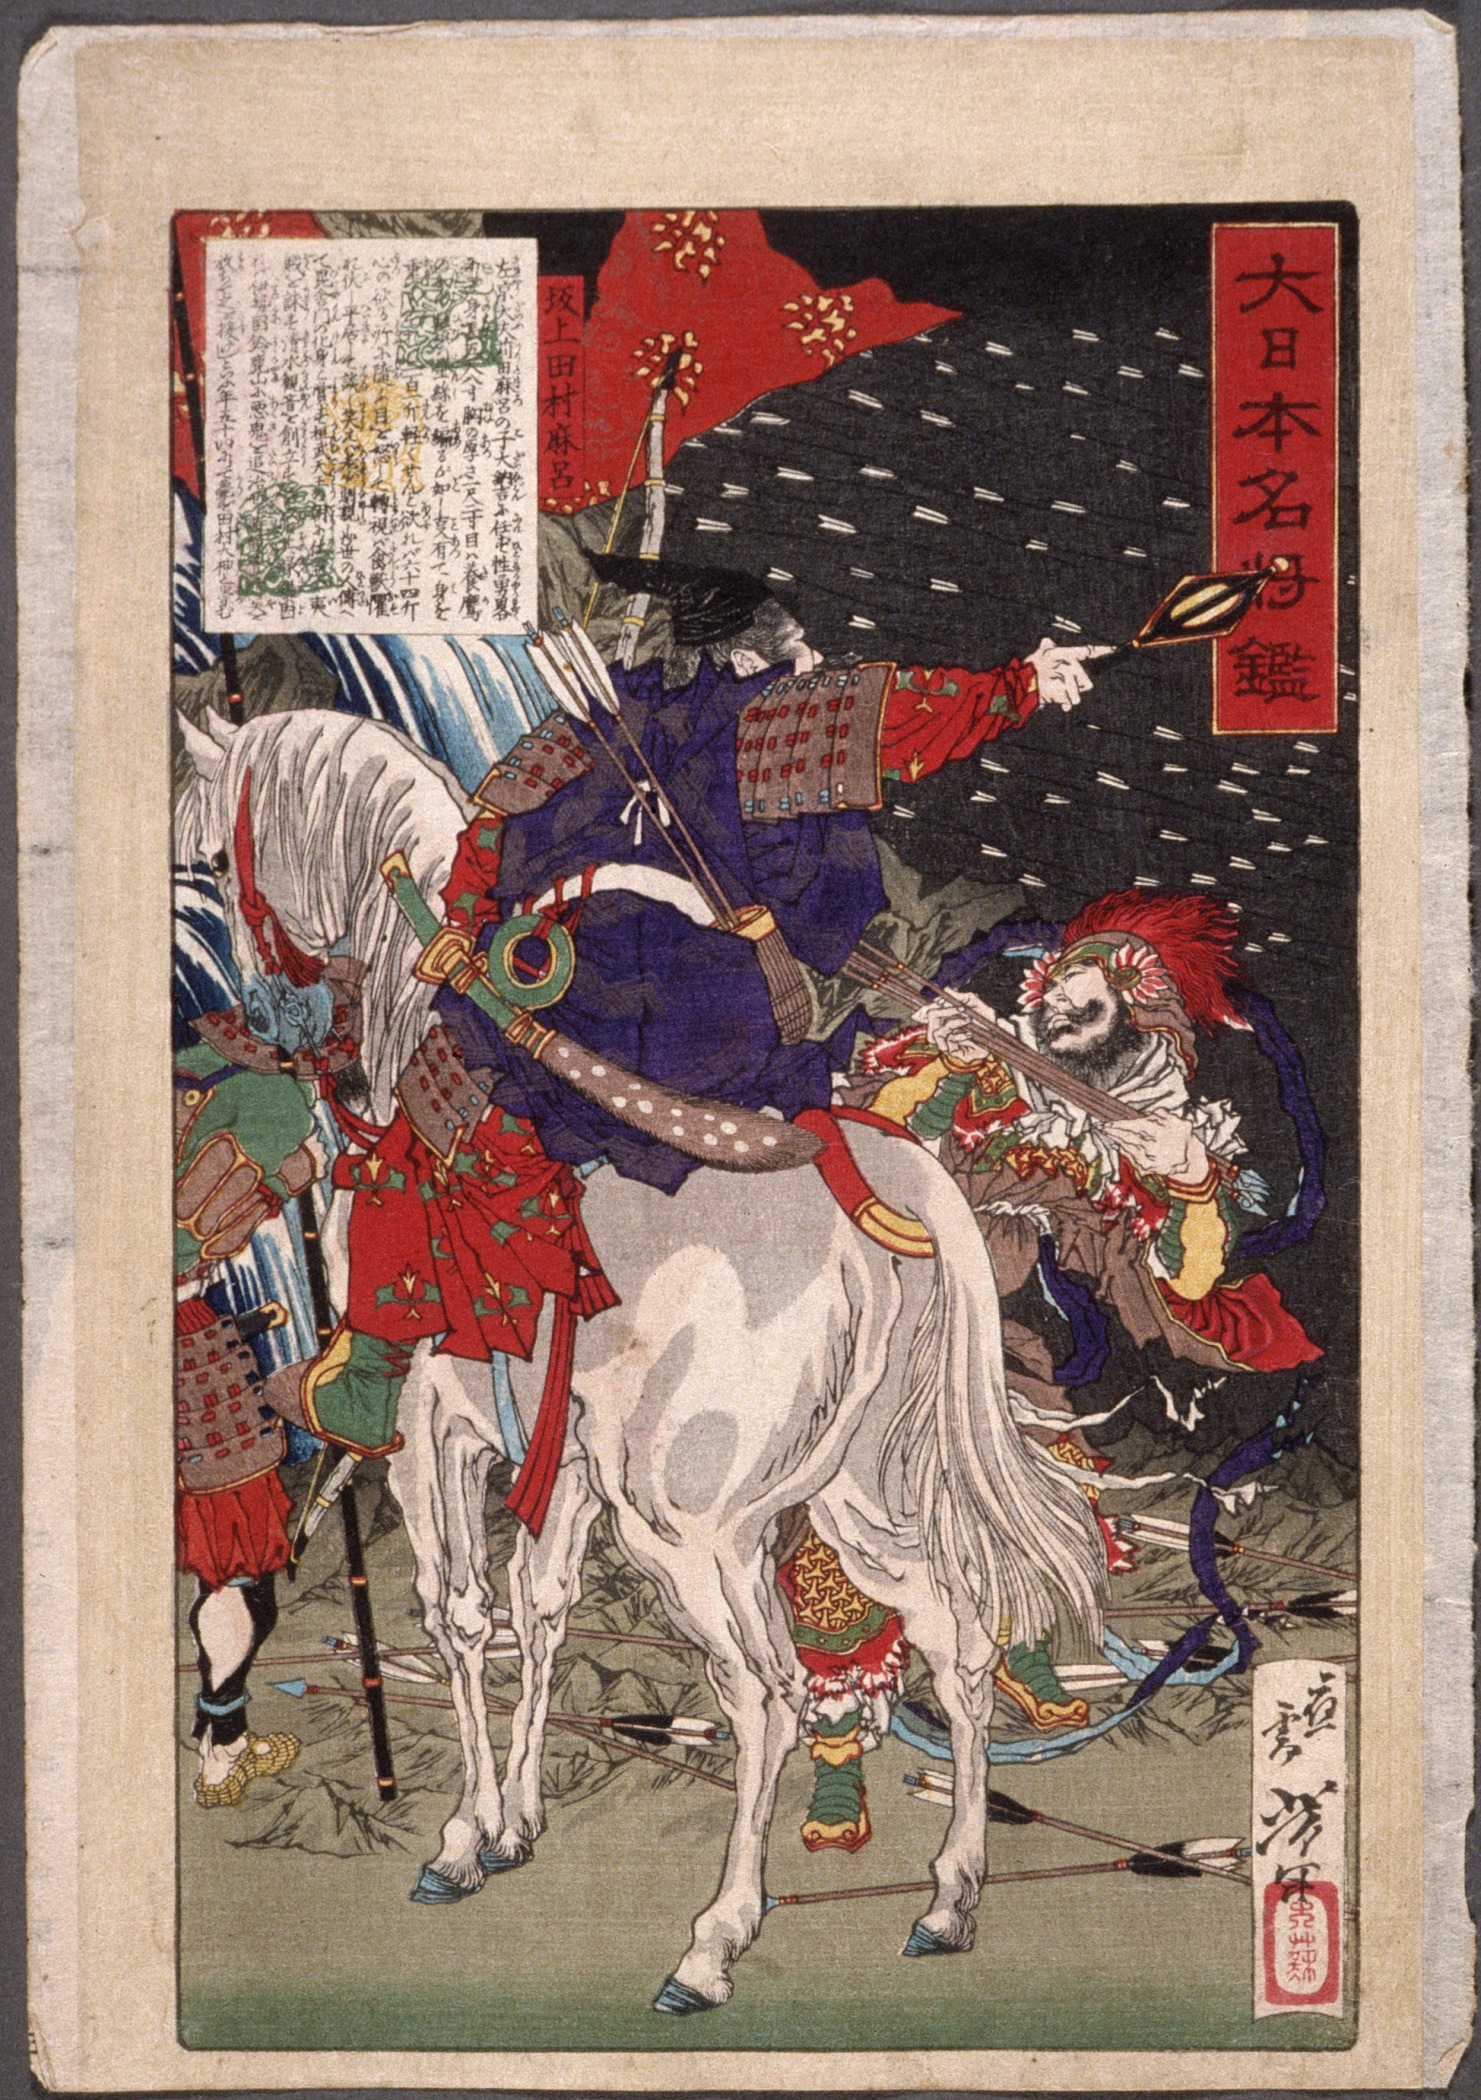 Саканоује Тамурамаро у киши стрела by Tsukioka Yoshitoshi - 1876. - 32 x 20,6 cm 